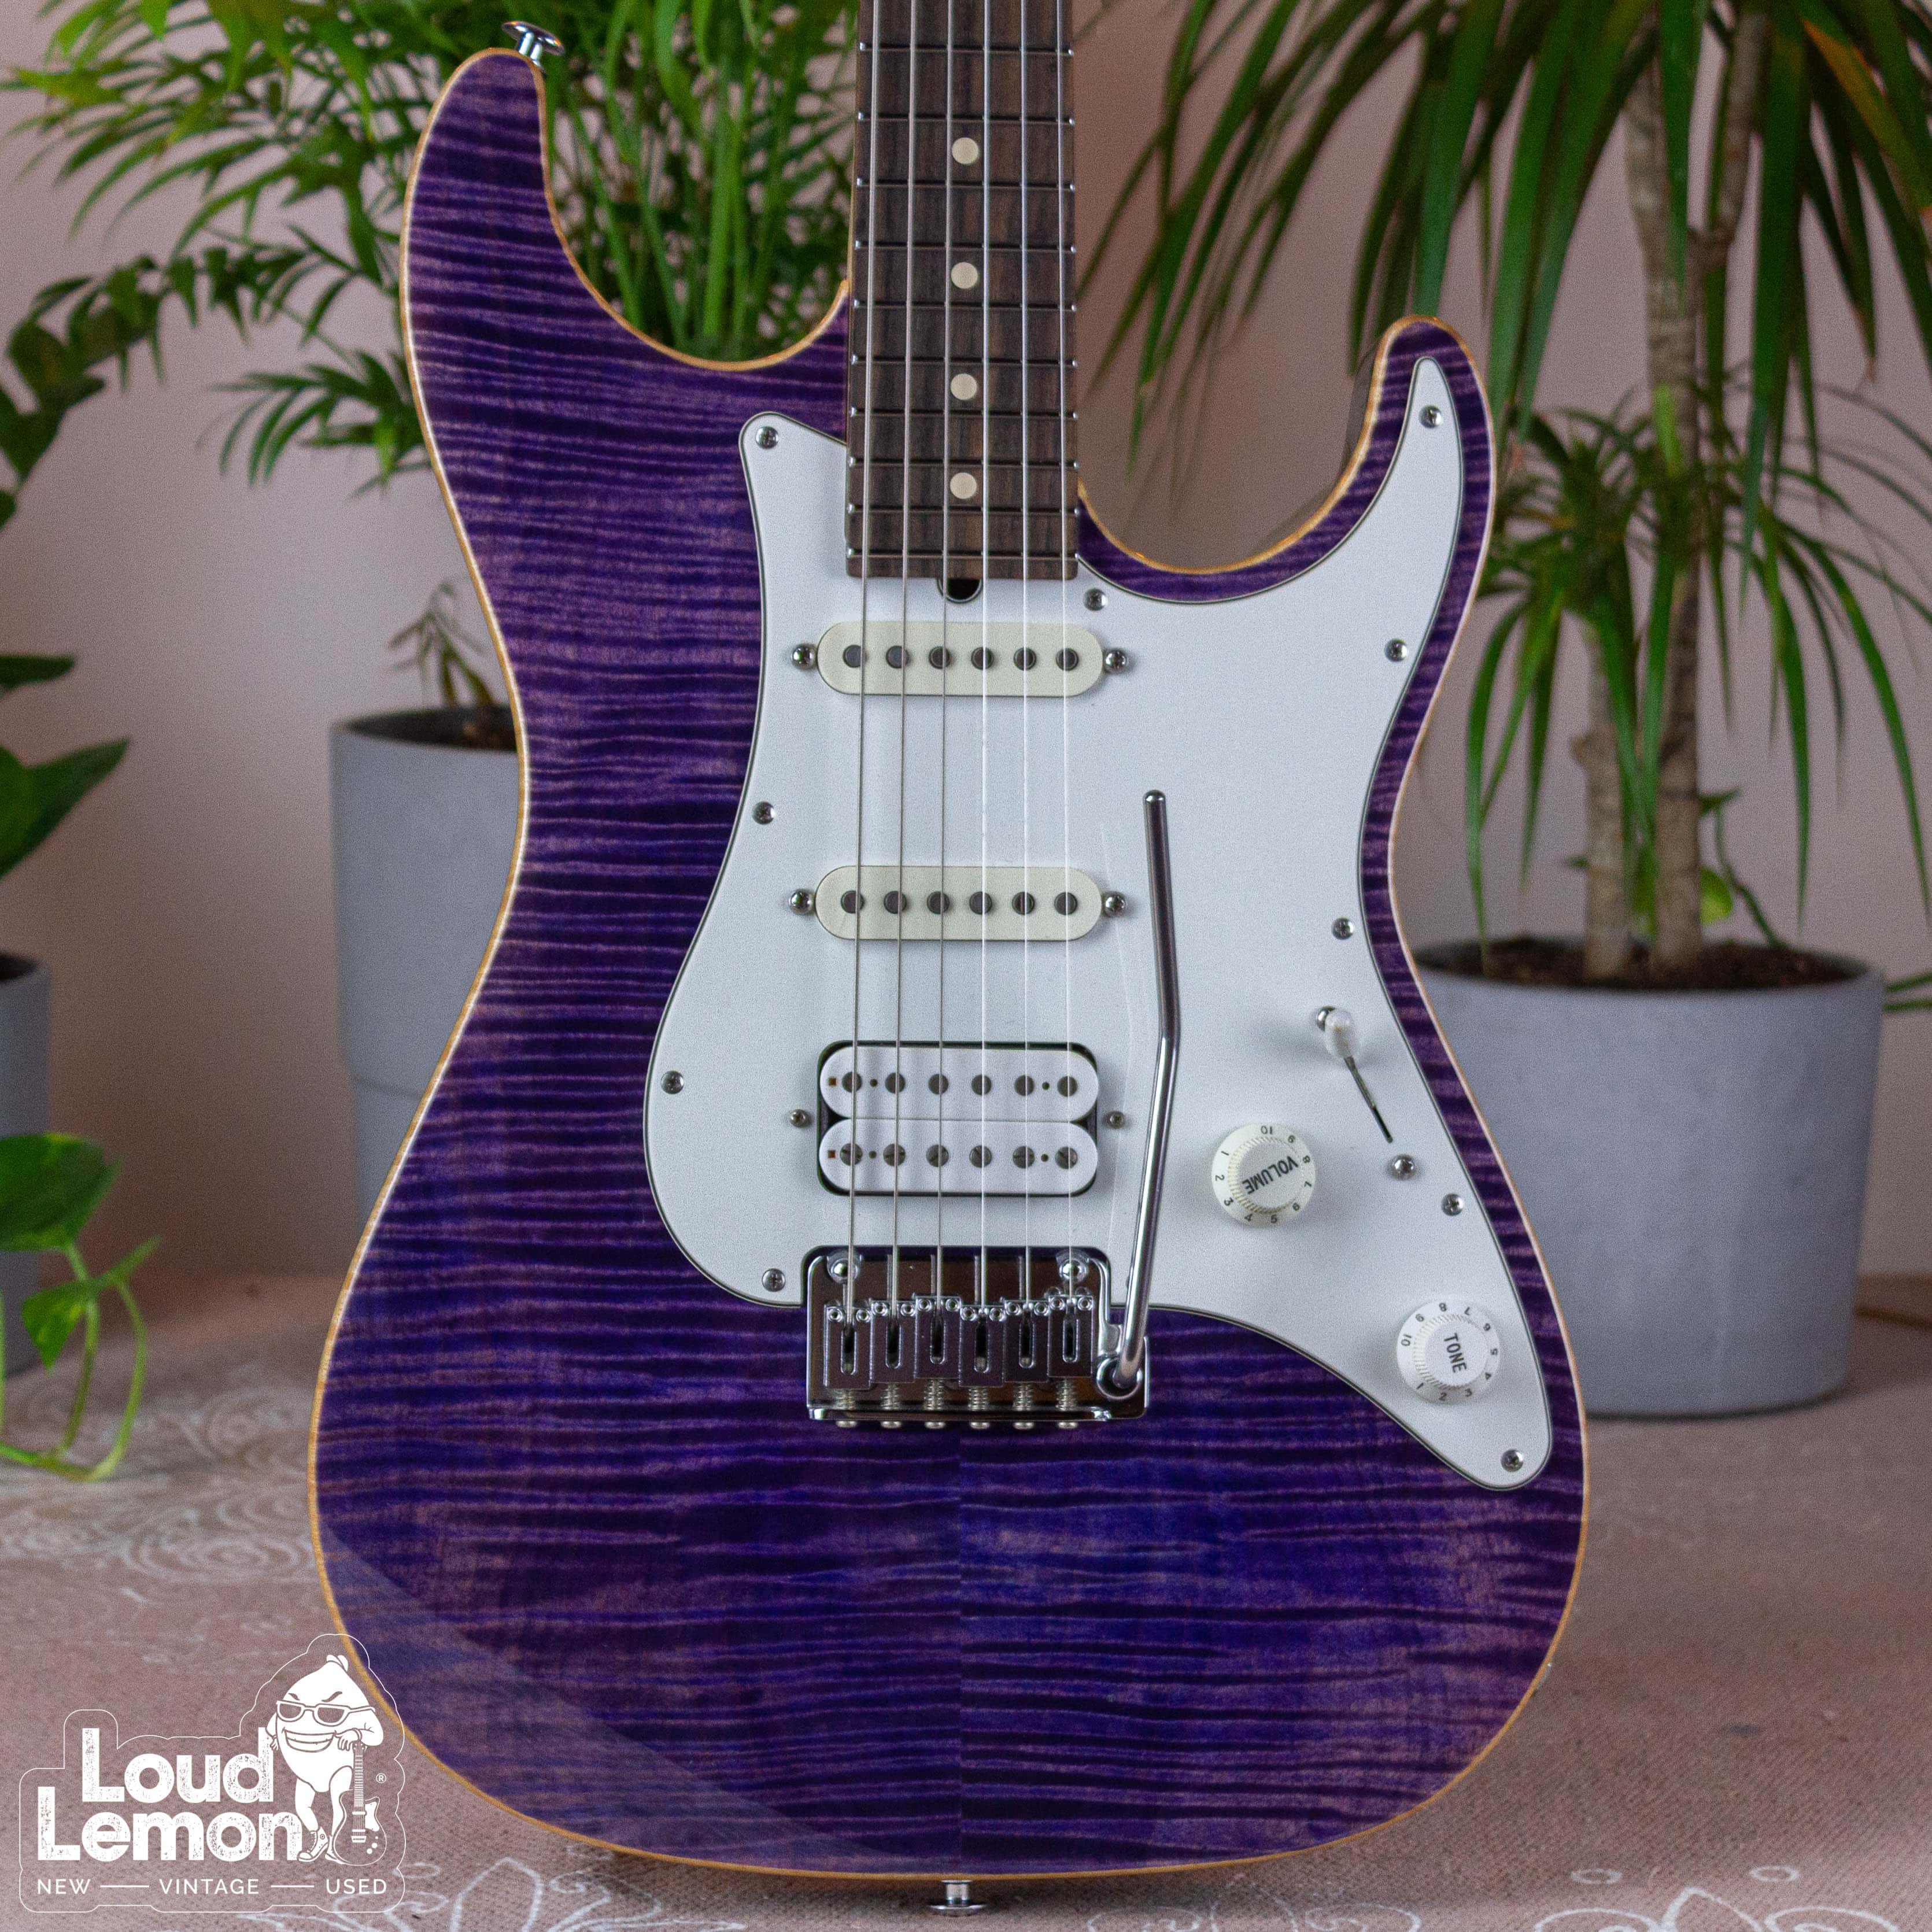 Suhr Pro Series - S3 Trans Purple 2010 USA электрогитара — купить в  магазине винтажных гитар | Loud Lemon